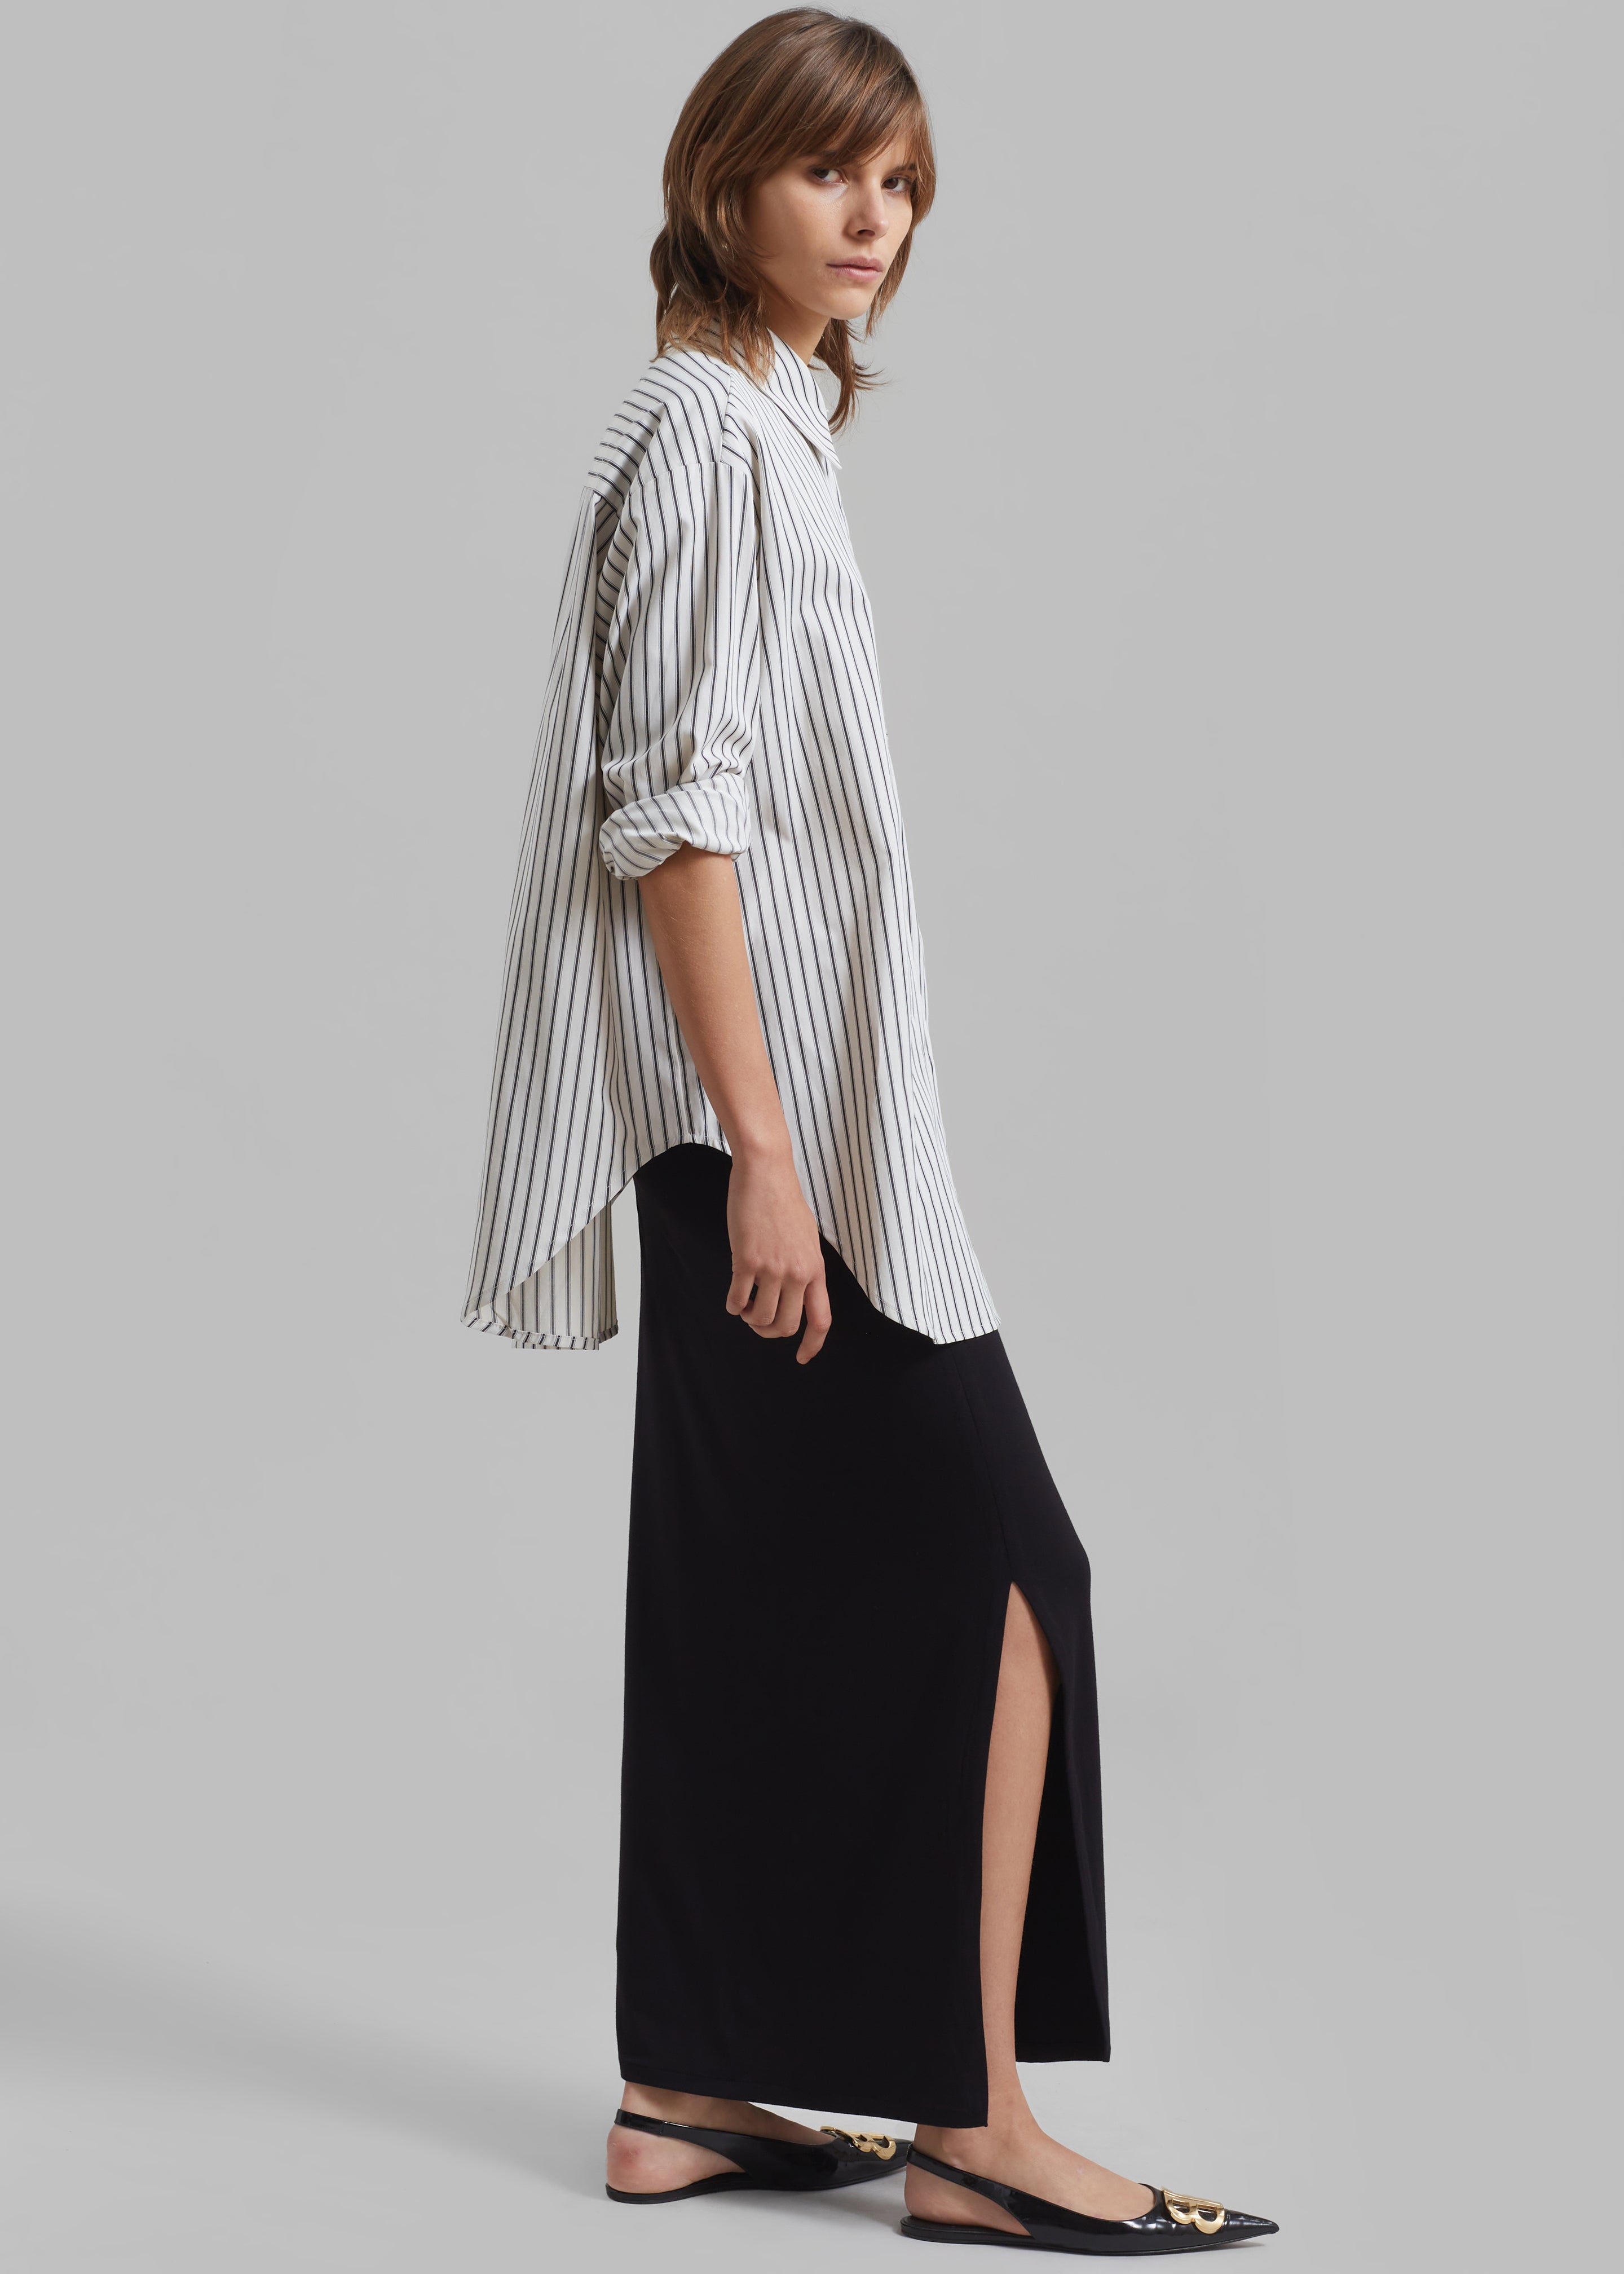 Rine Pocket Shirt - White/Black Stripe - 2